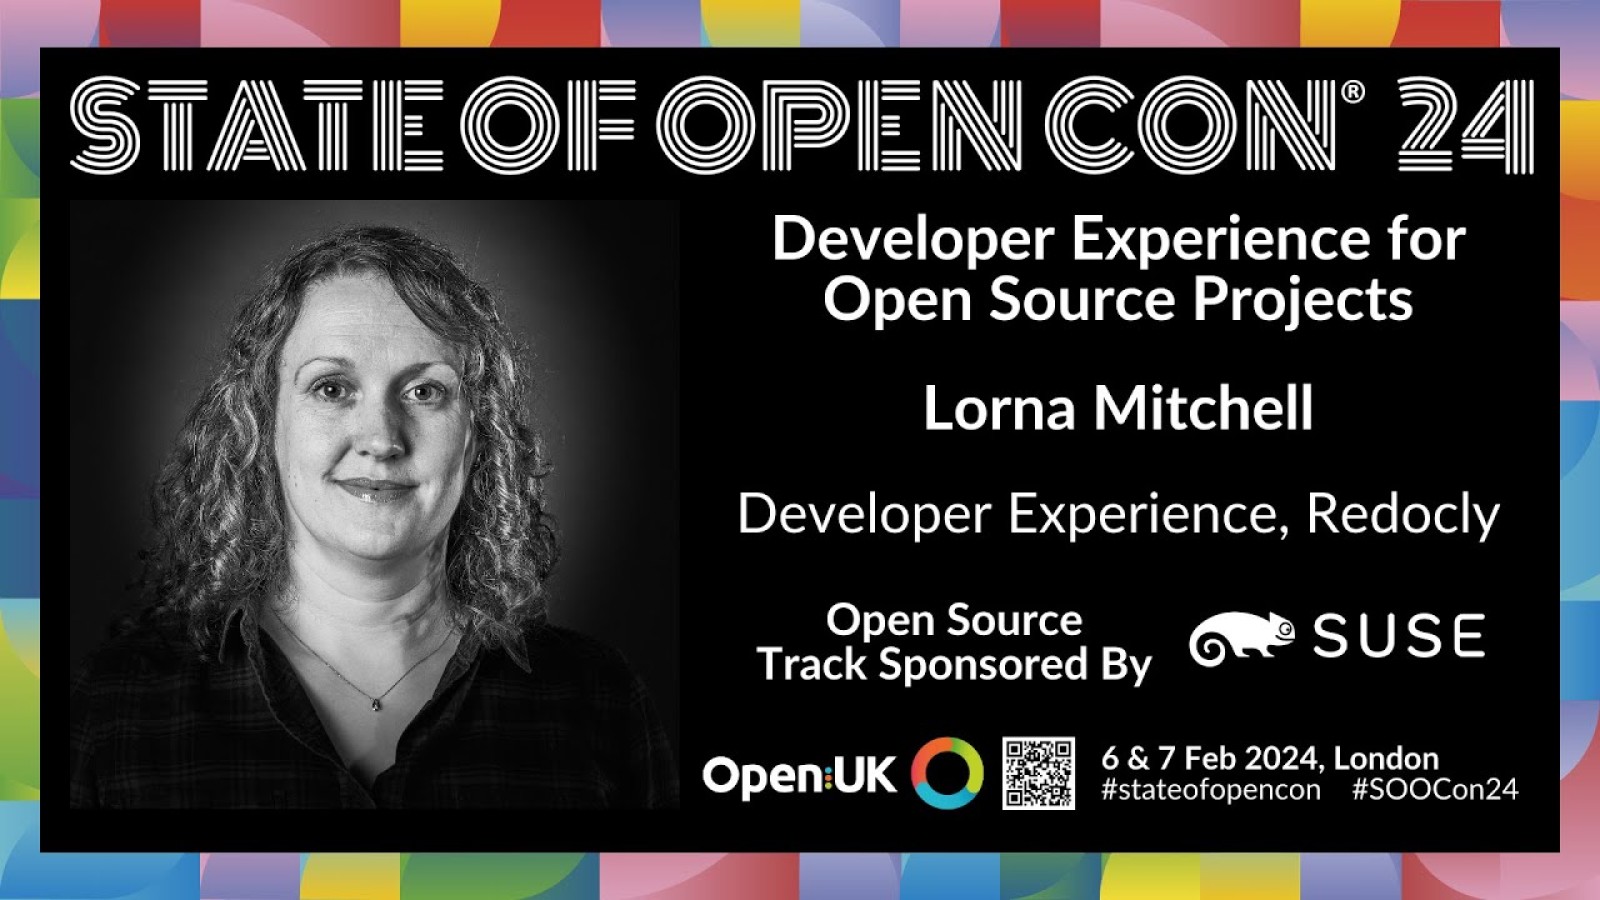 Developer Experience in Open Source